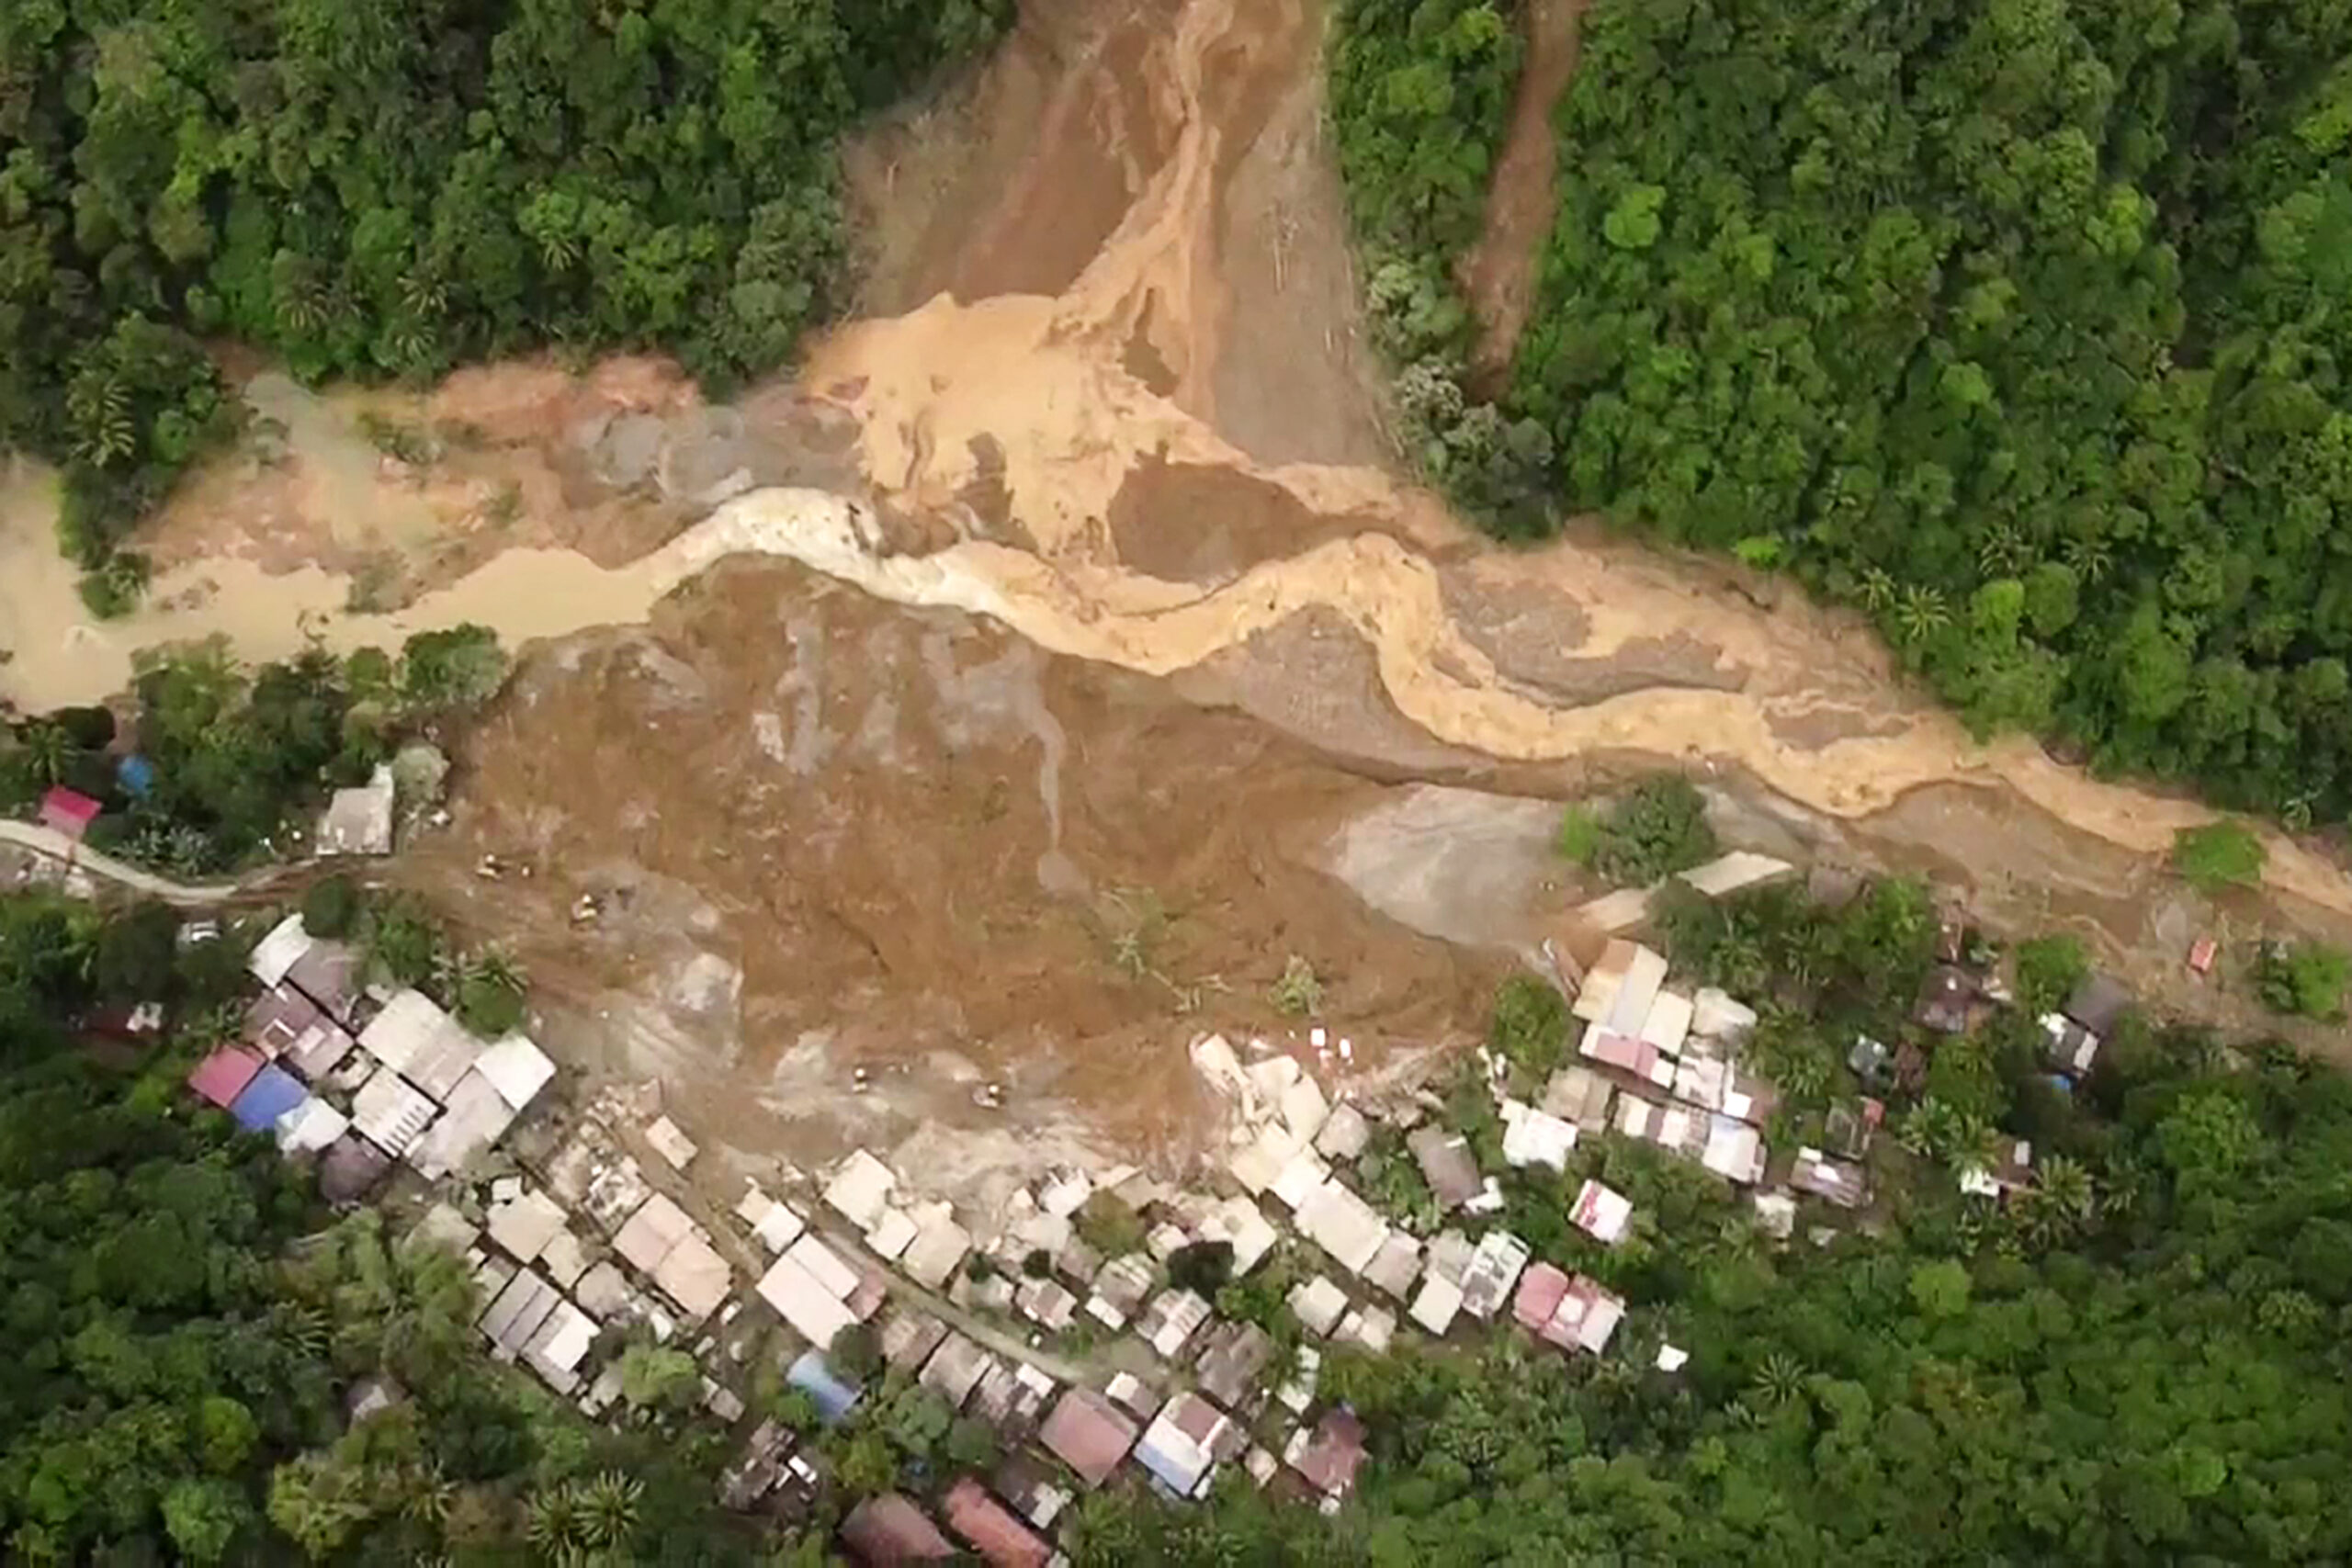 Faulty warnings, deforestation turned rains ‘deadly’ in Mindanao